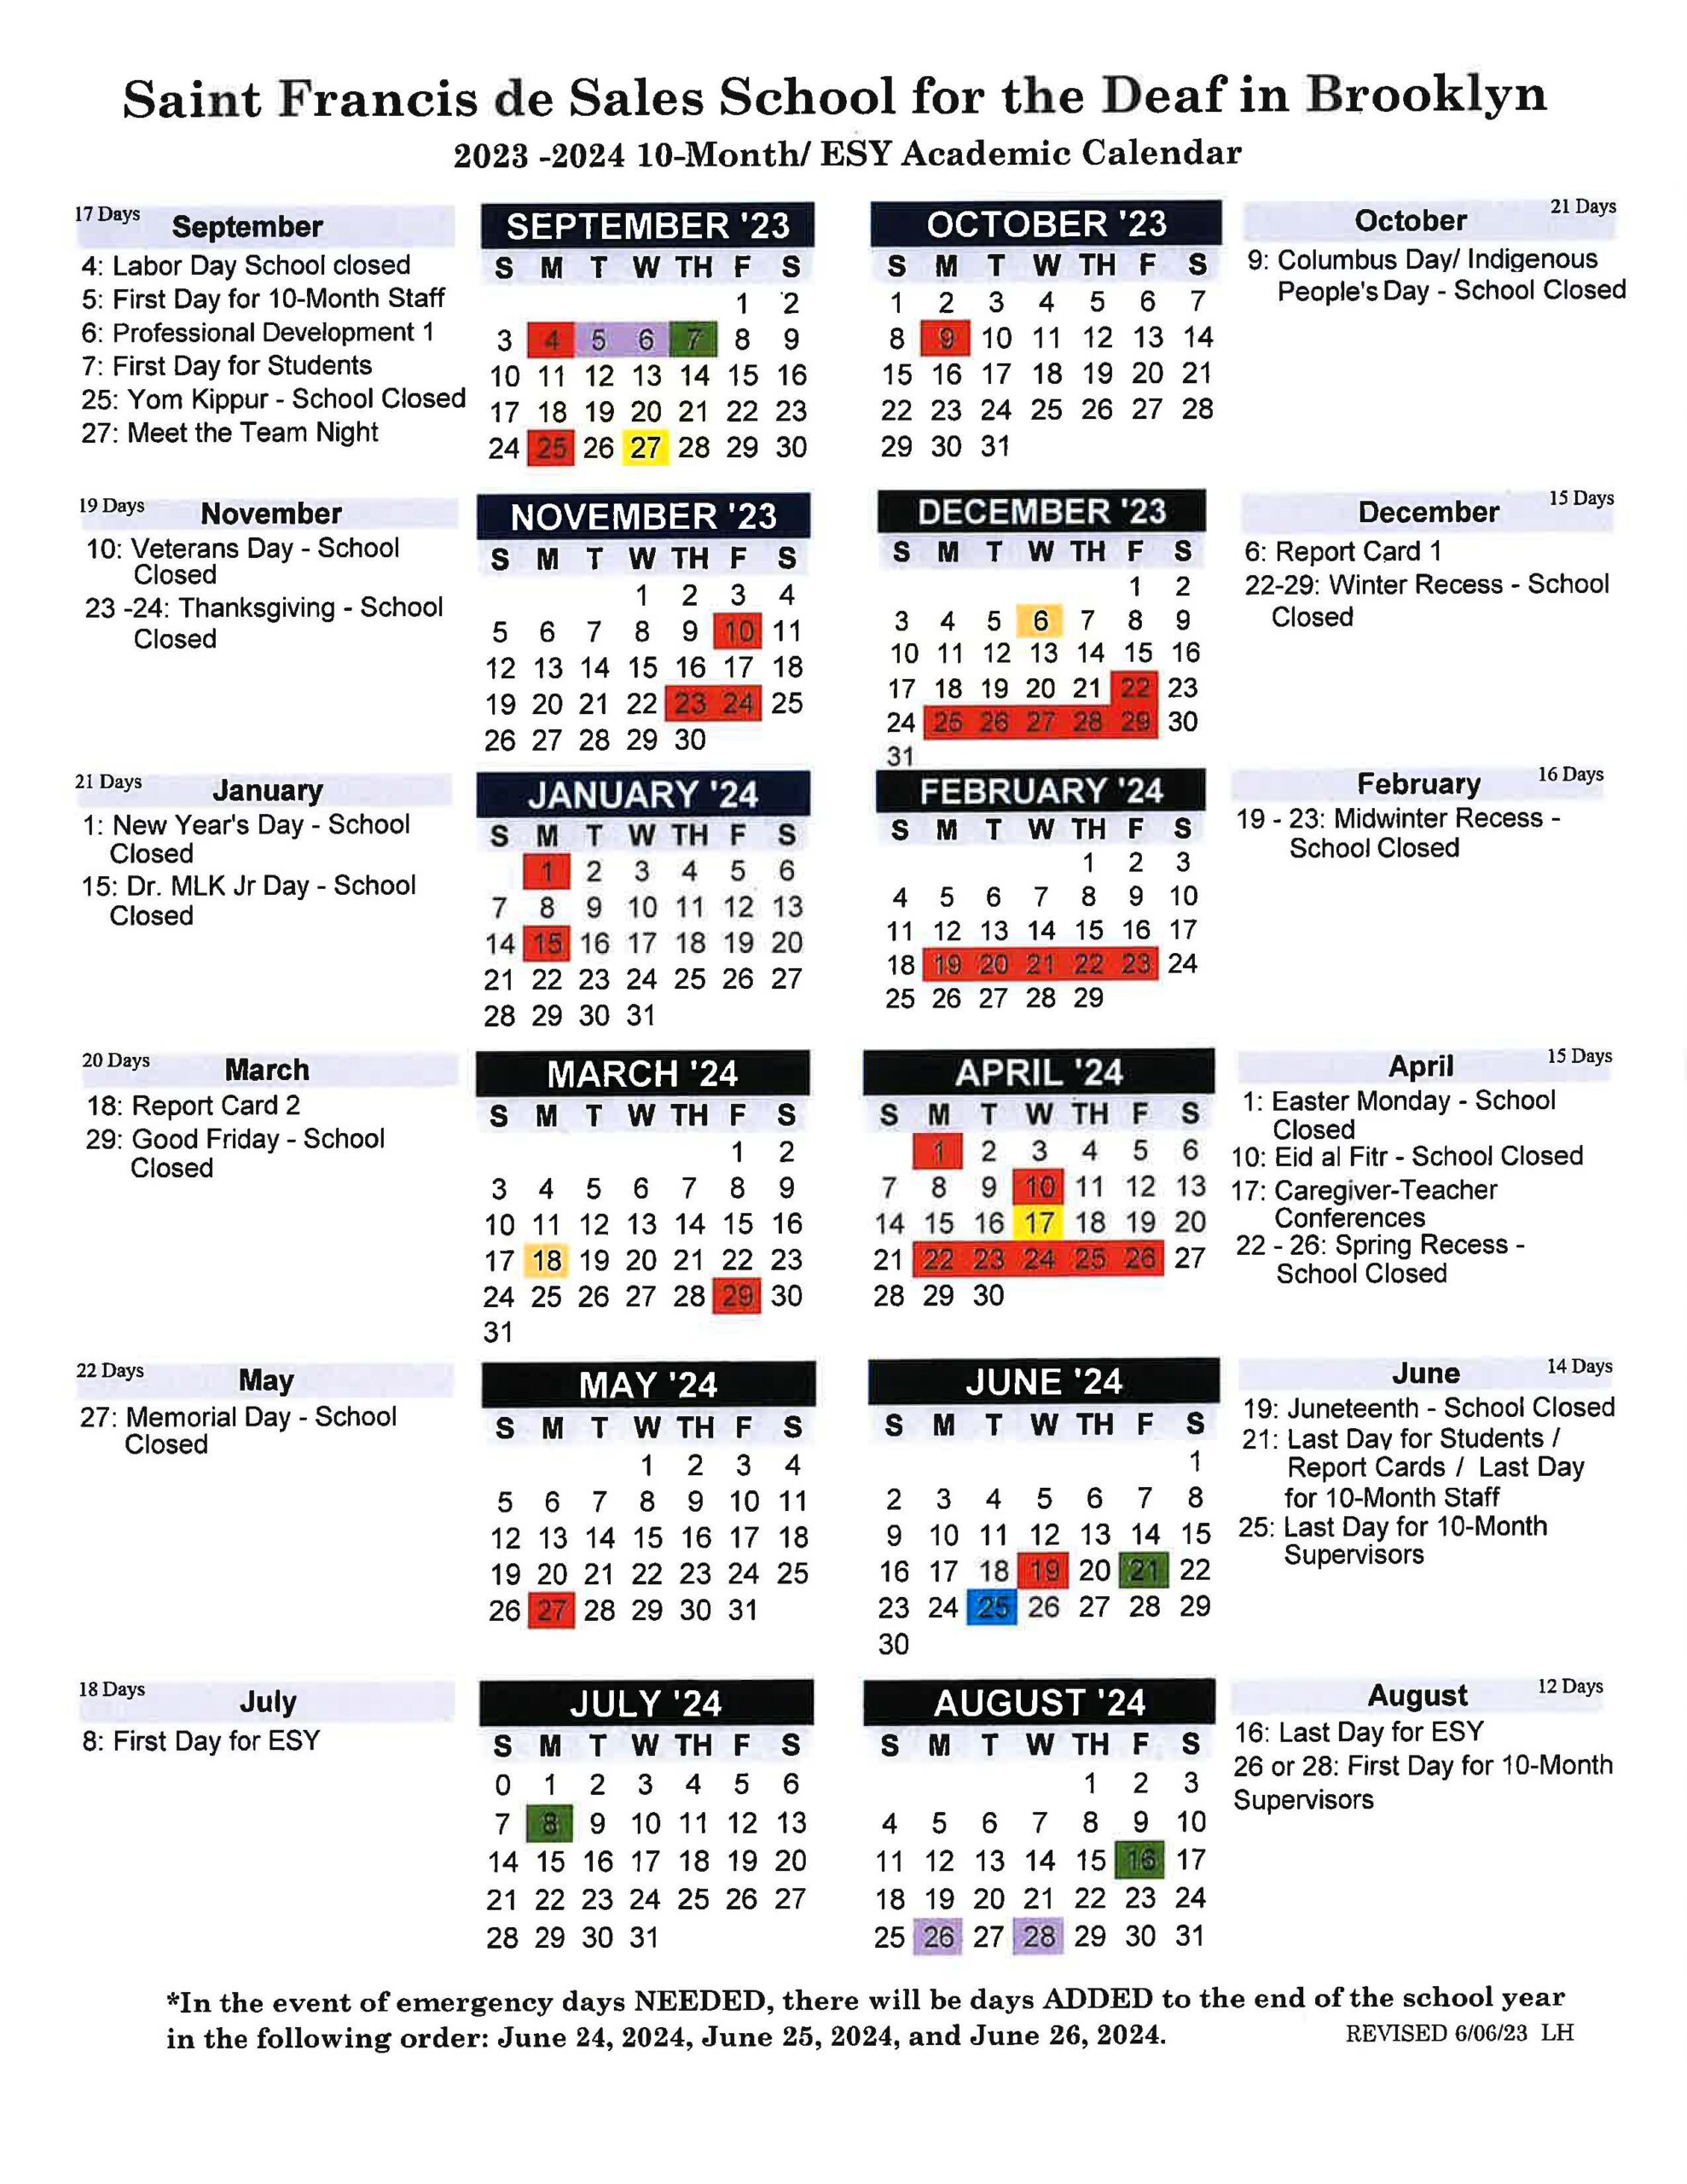 an image of the 2020-2021 school calendar